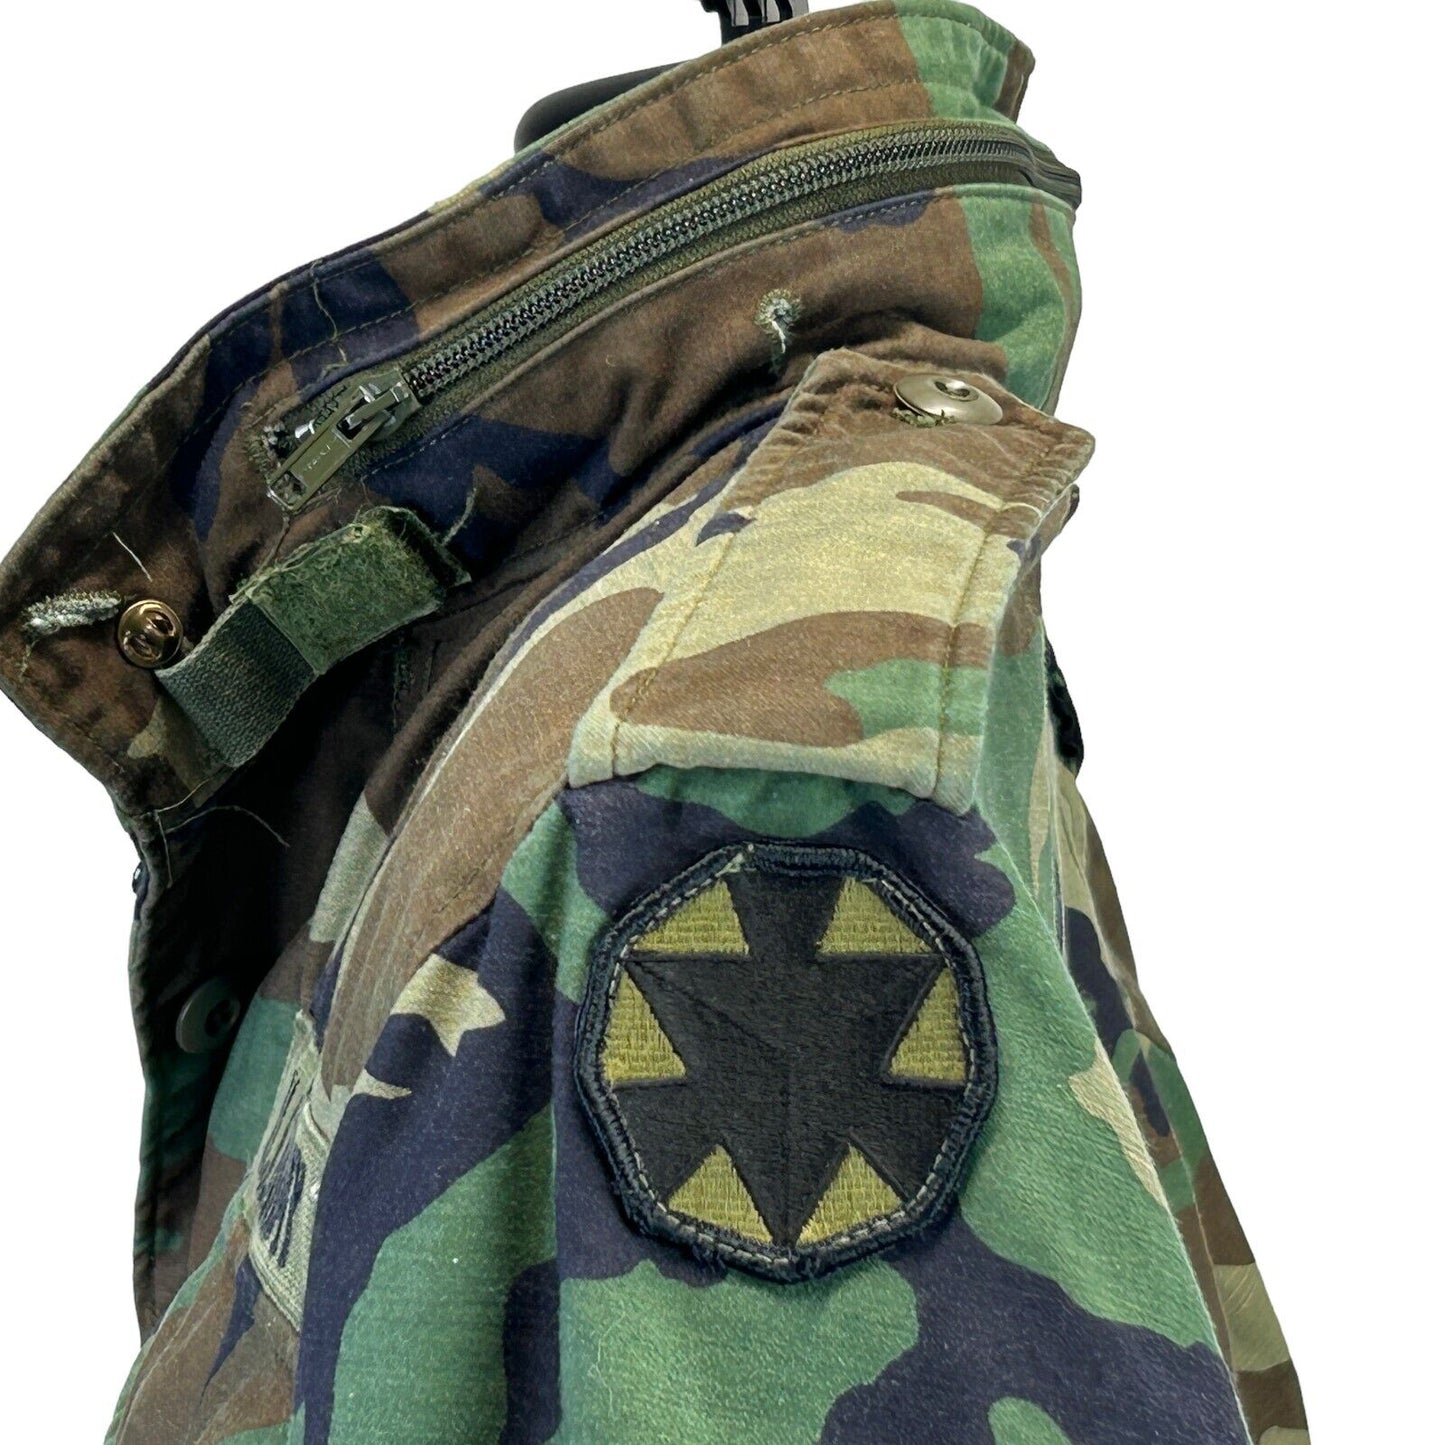 US Army Paratrooper Vintage Hooded Field Coat Jacket Uniform BDU M65 Small Short